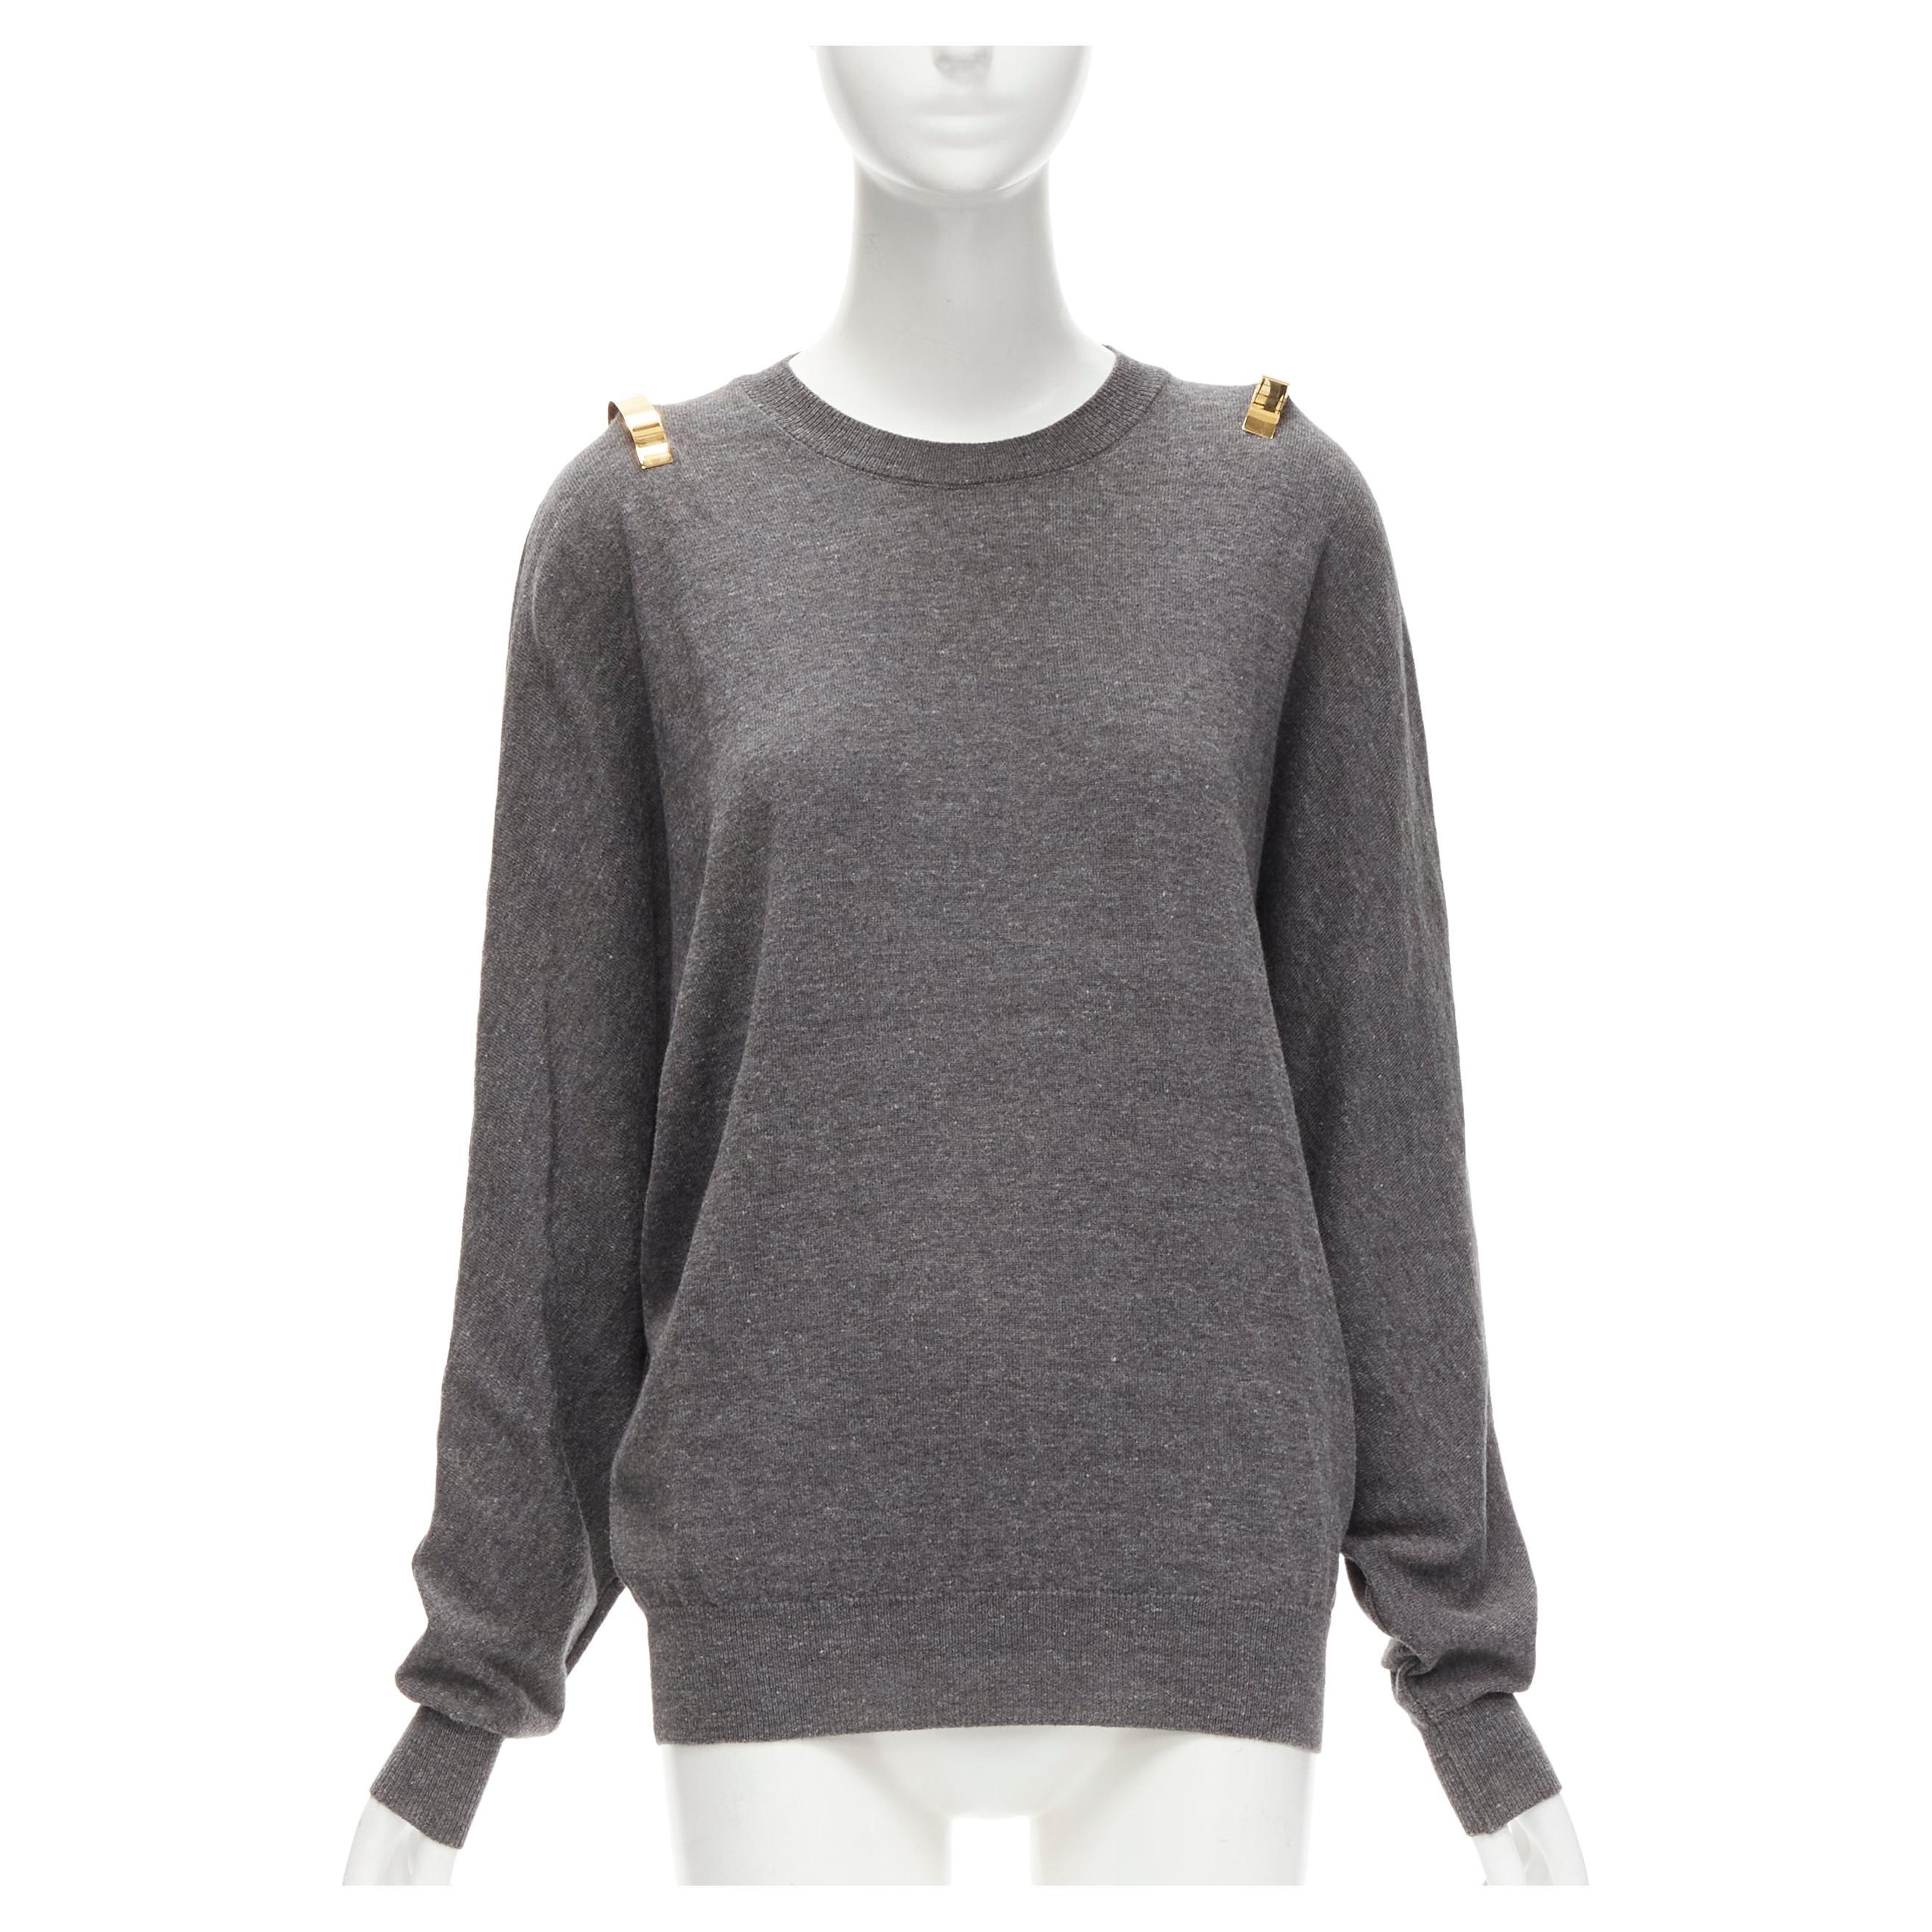 GIVENCHY Riccardo Tisci gold metal shoulder bar cuff grey wool alpaca sweater S For Sale